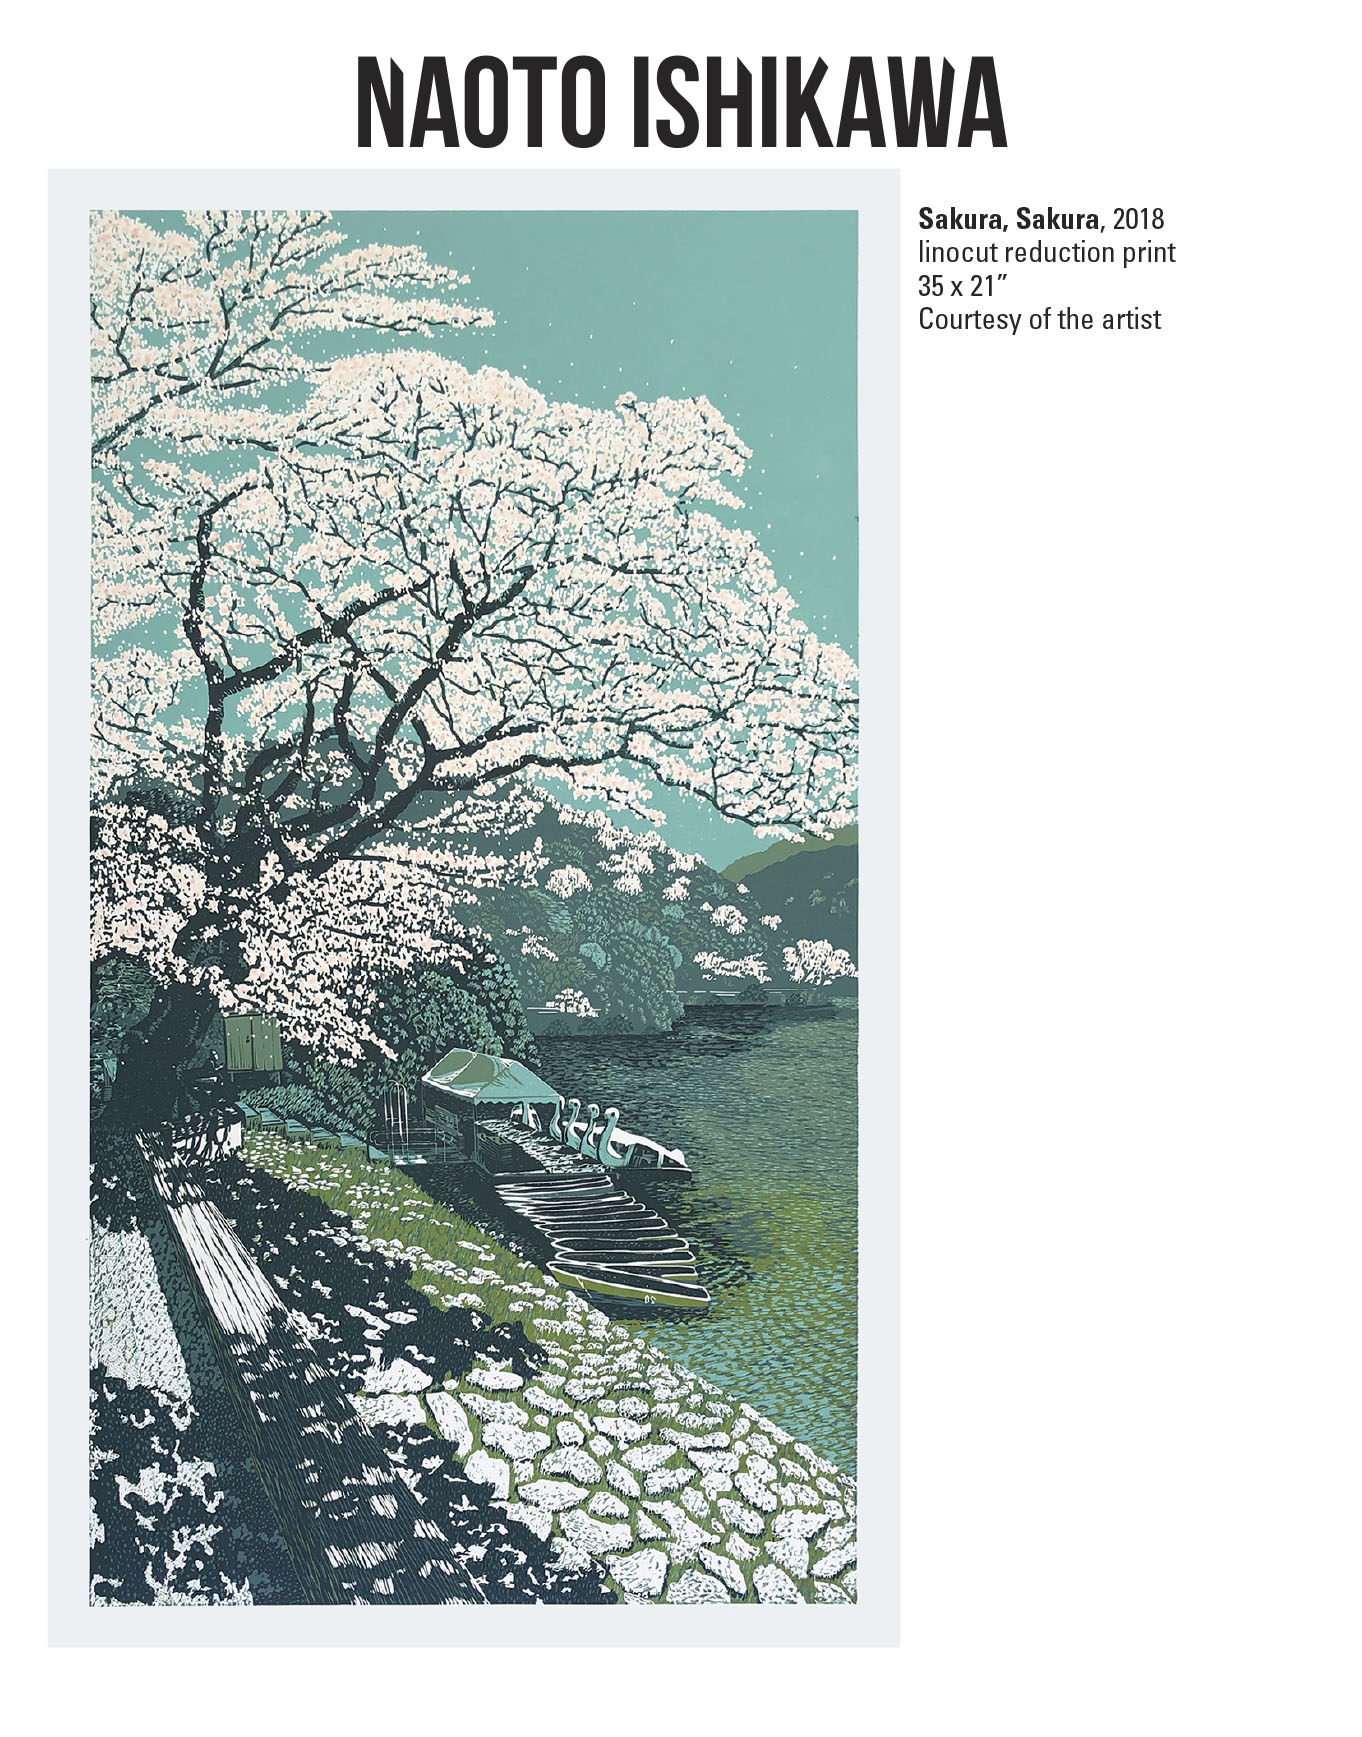 Naoto Ishikawa, Sakura, Sakura, 2018. Linocut reduction print. 35 x 21” Courtesy of the artist. A print of boats on the water near a tree with white flowers